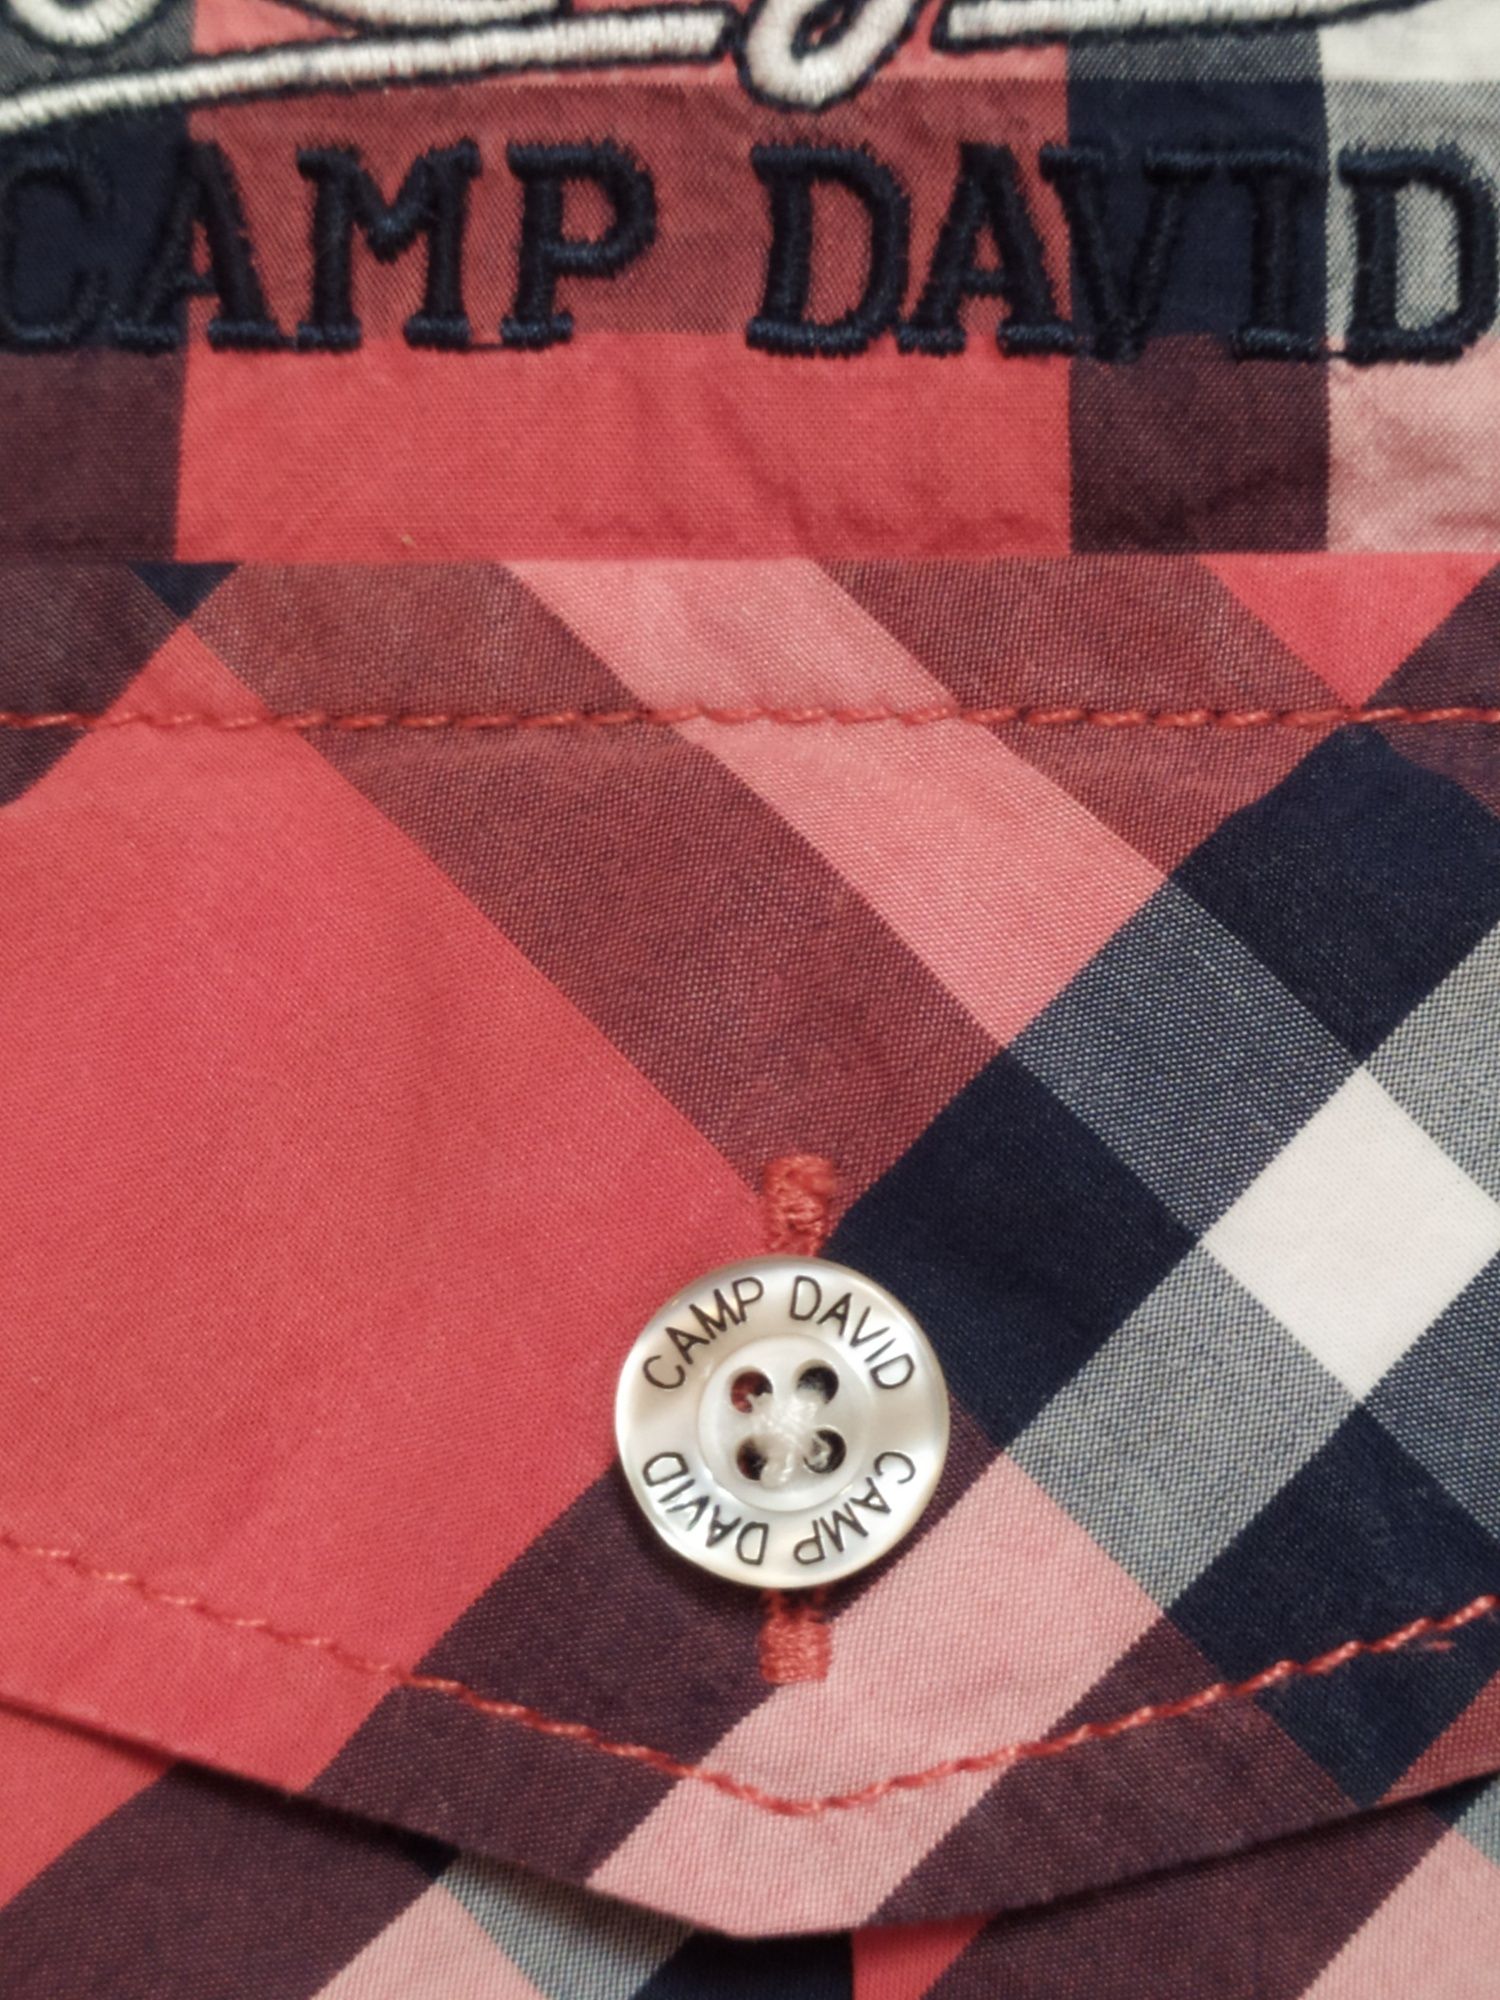 Camp David Red рубашка Германия, cotton 100%, р. M, 48-50-52, супер!